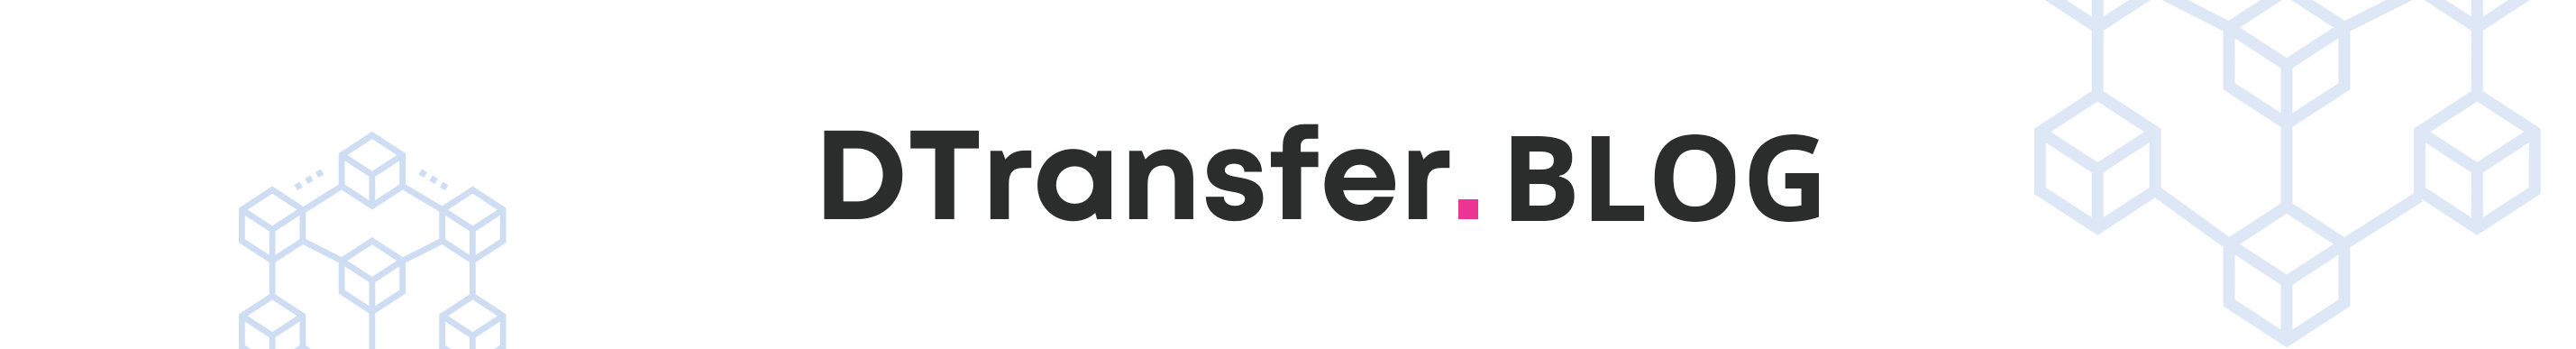 DTransfer-Blog-Header